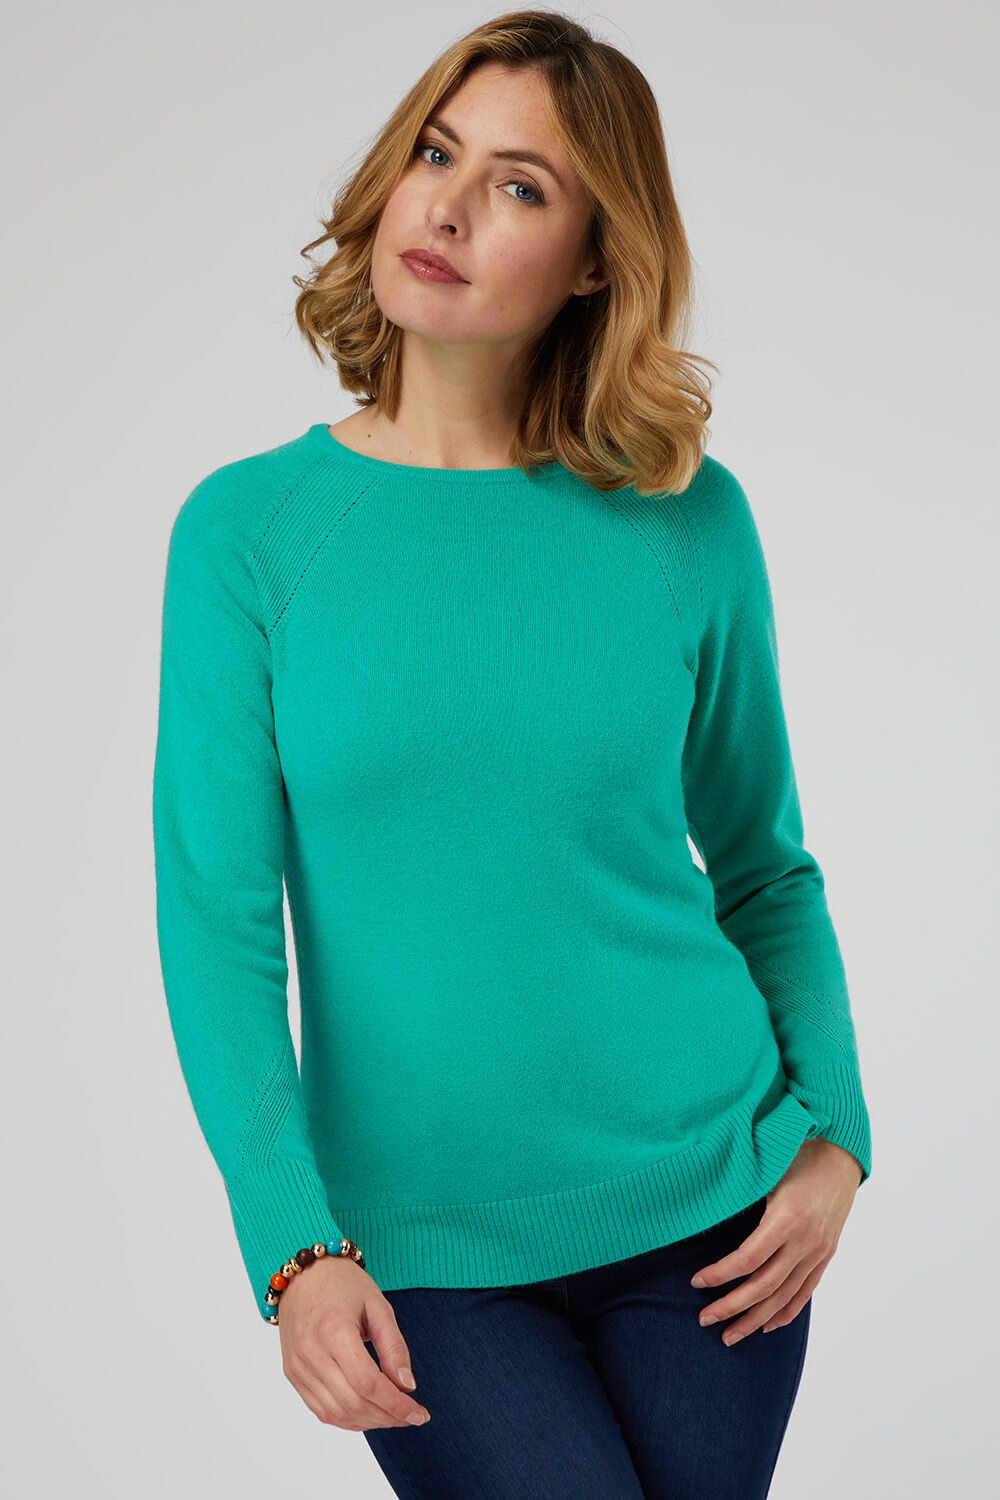 Ex Bon Marche Turquoise Teal High Collar Neck Fine knit Jumper Size S//M//L//XL